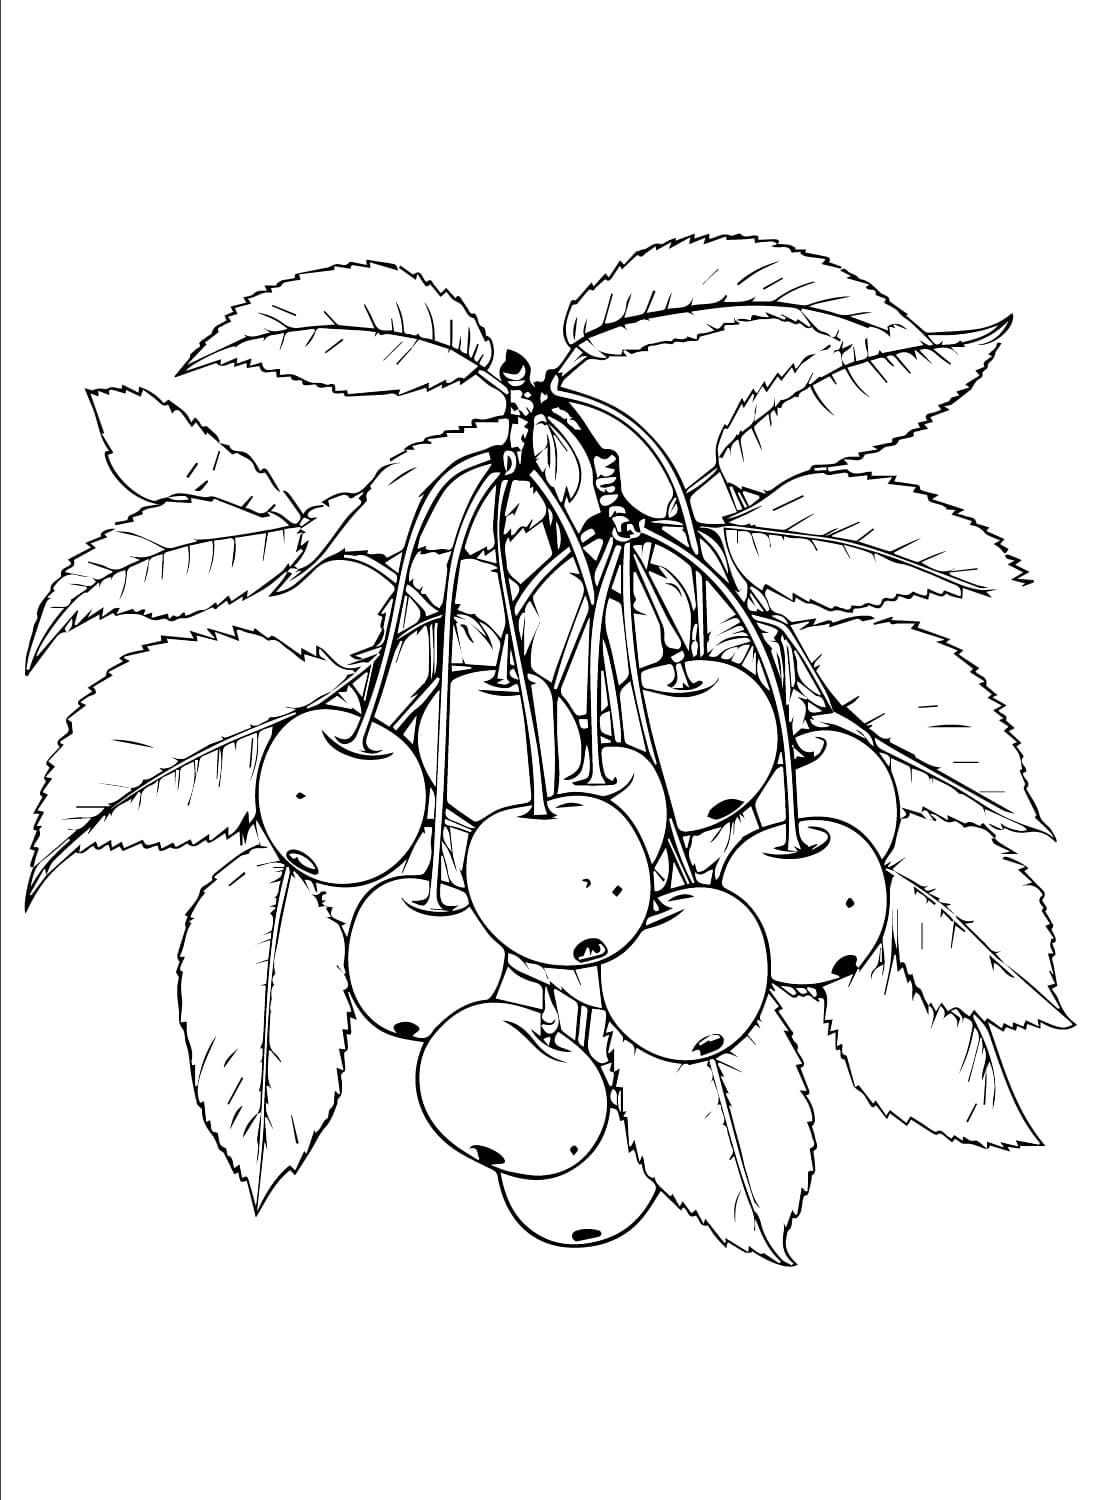 Branche de Cerisier coloring page